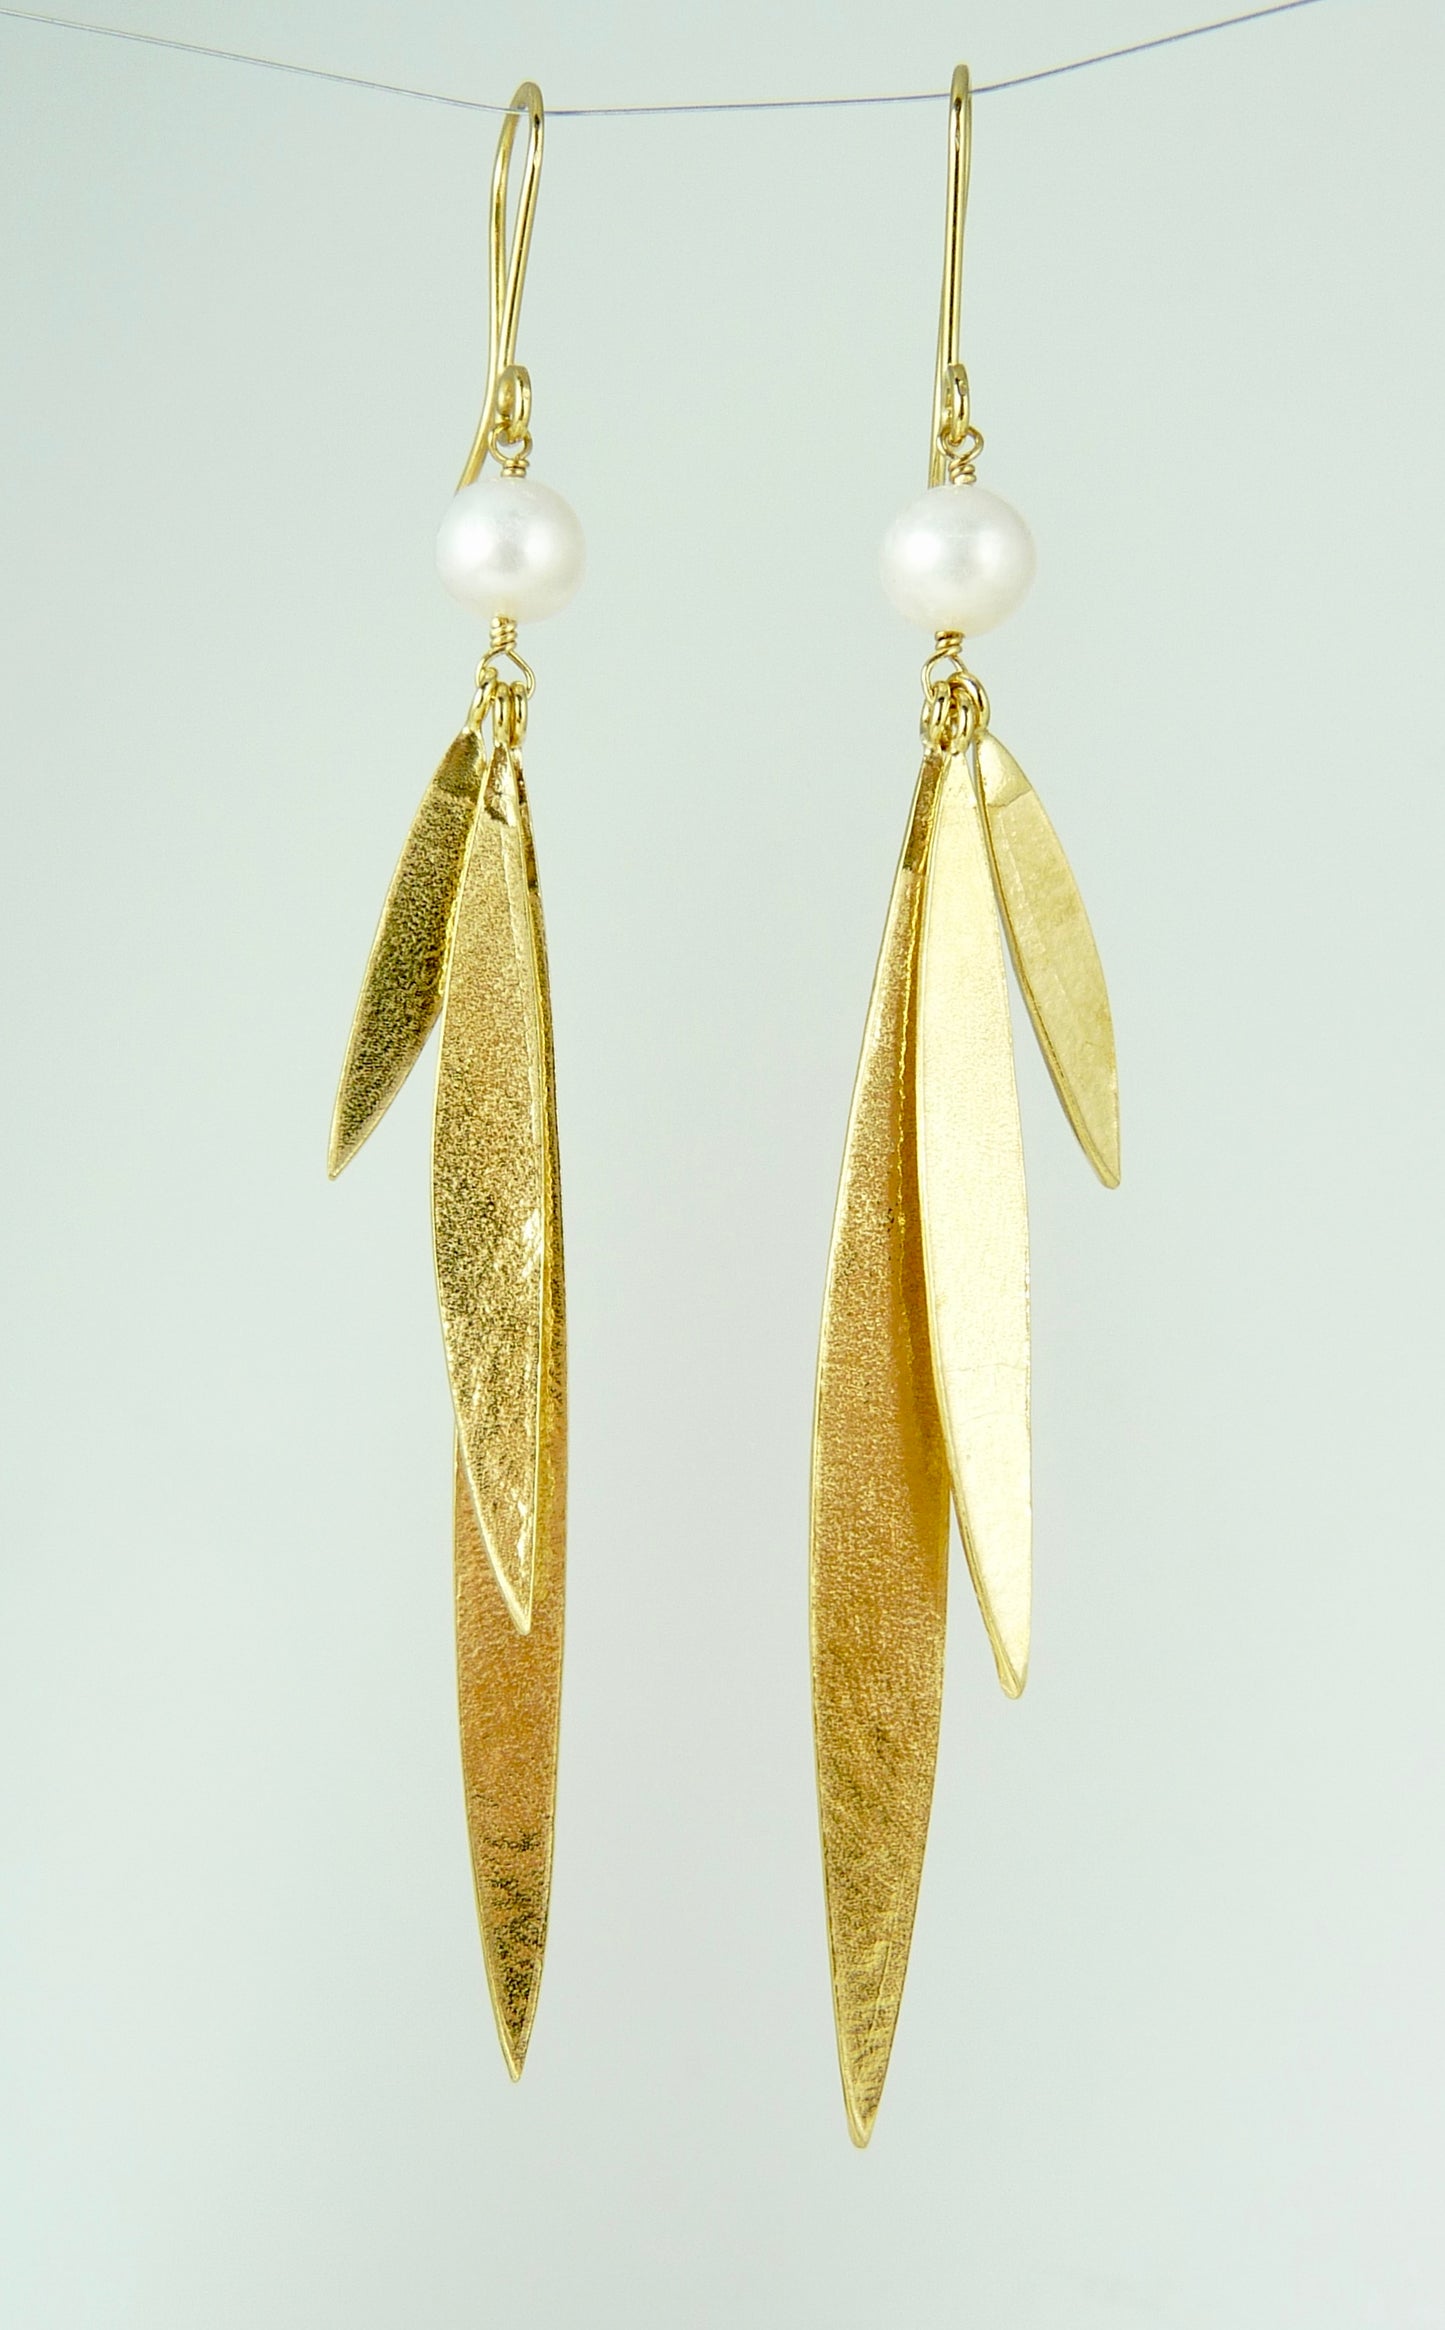 Lily Long Leaf Earrings with gemstones